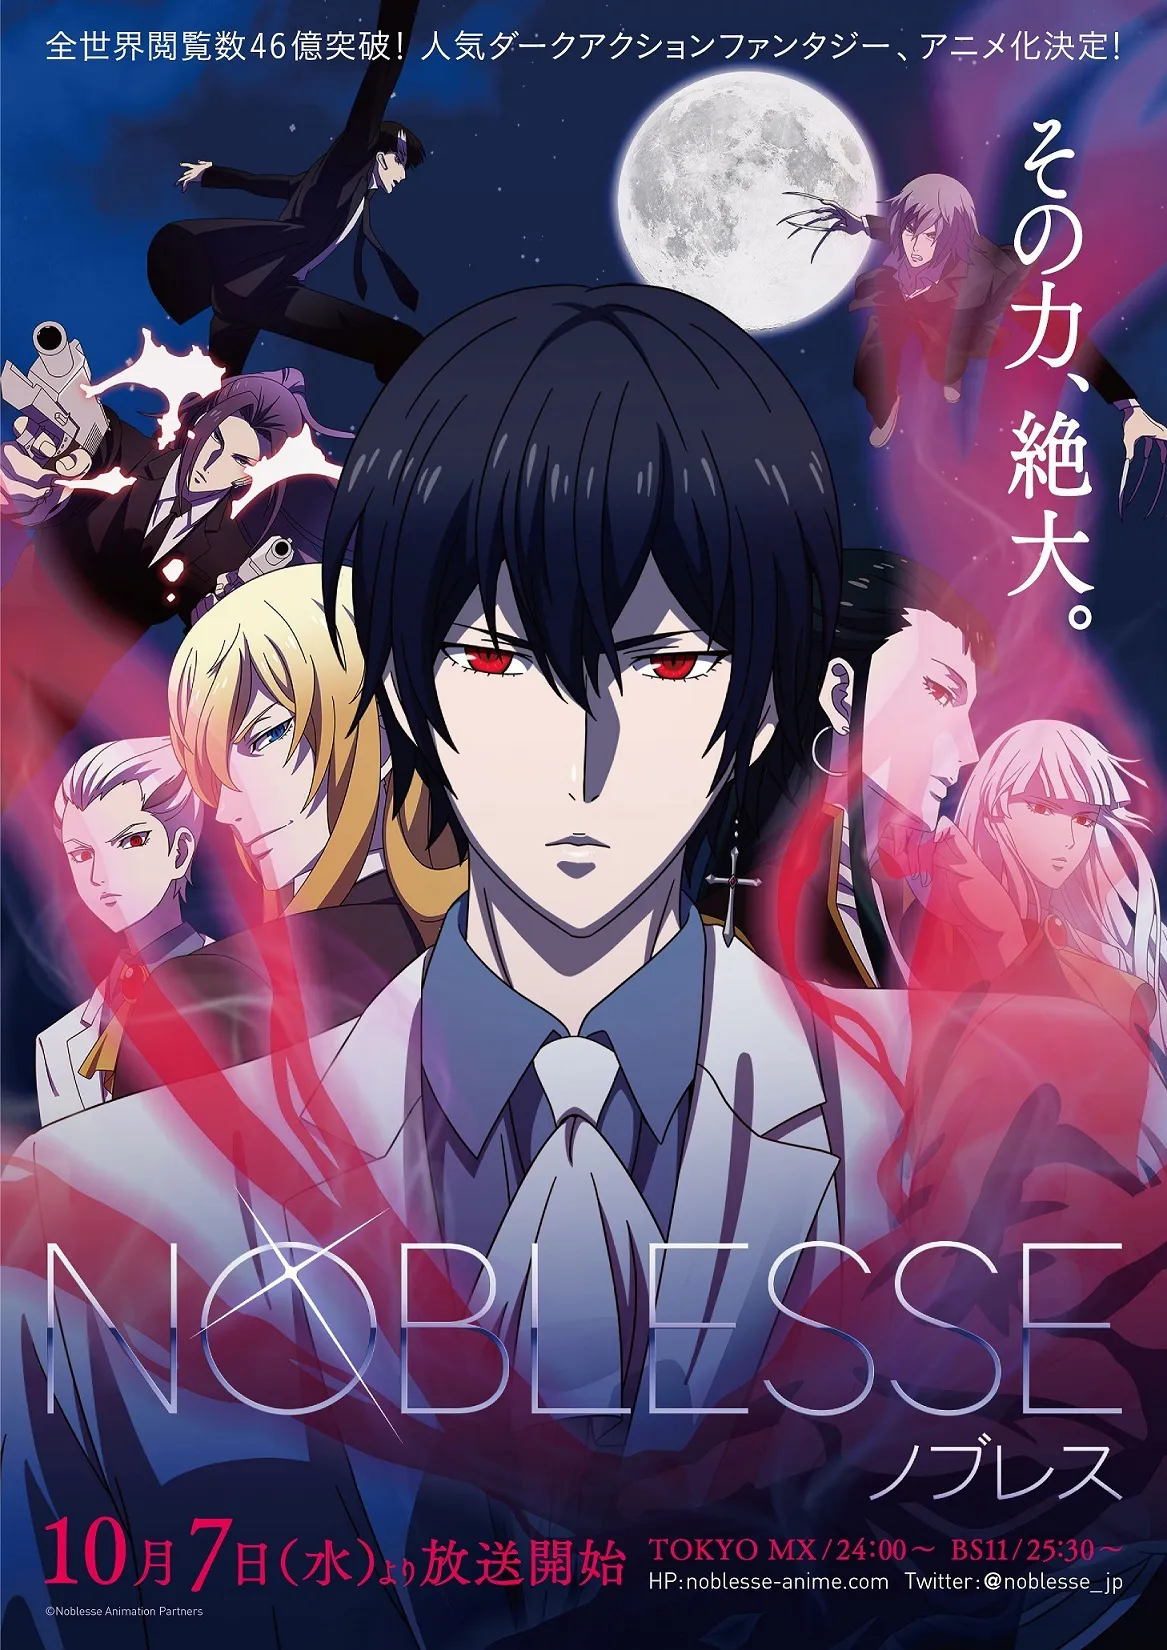 「NOBLESSE -ノブレス-」オープニング主題歌入りPVが初解禁された